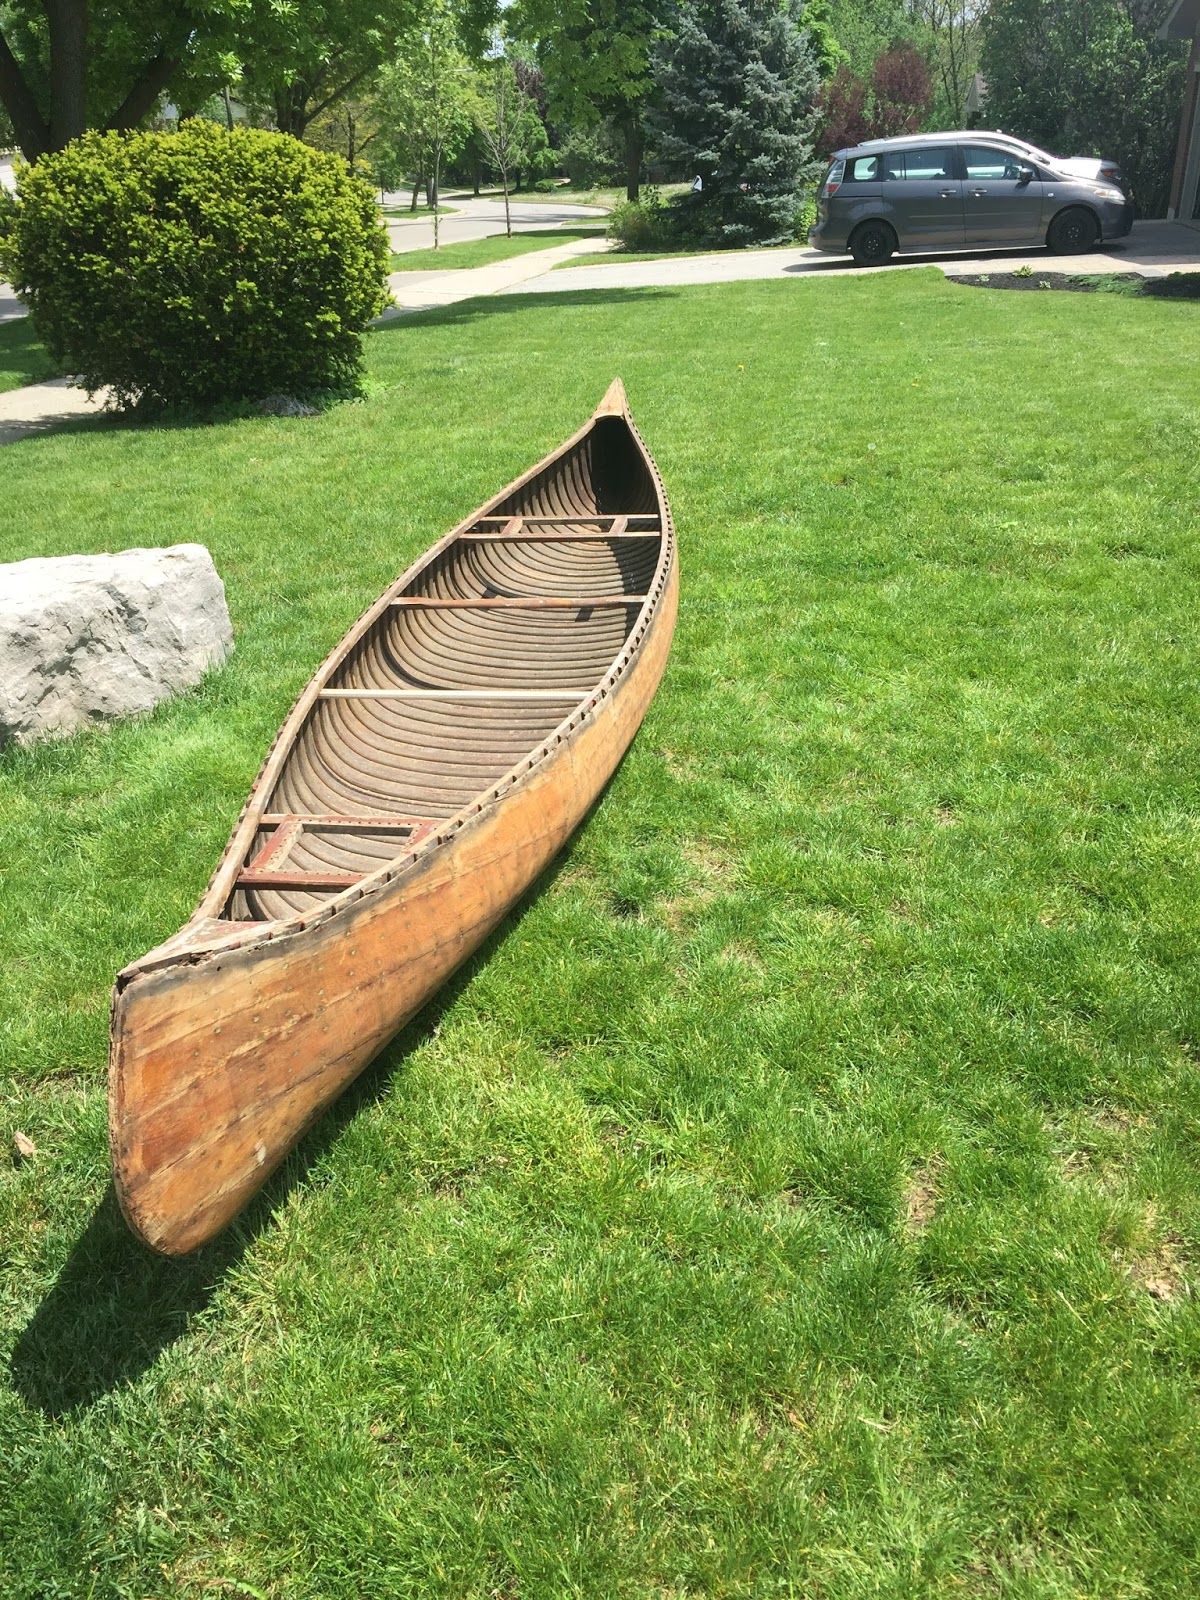 Best-selling canoe models